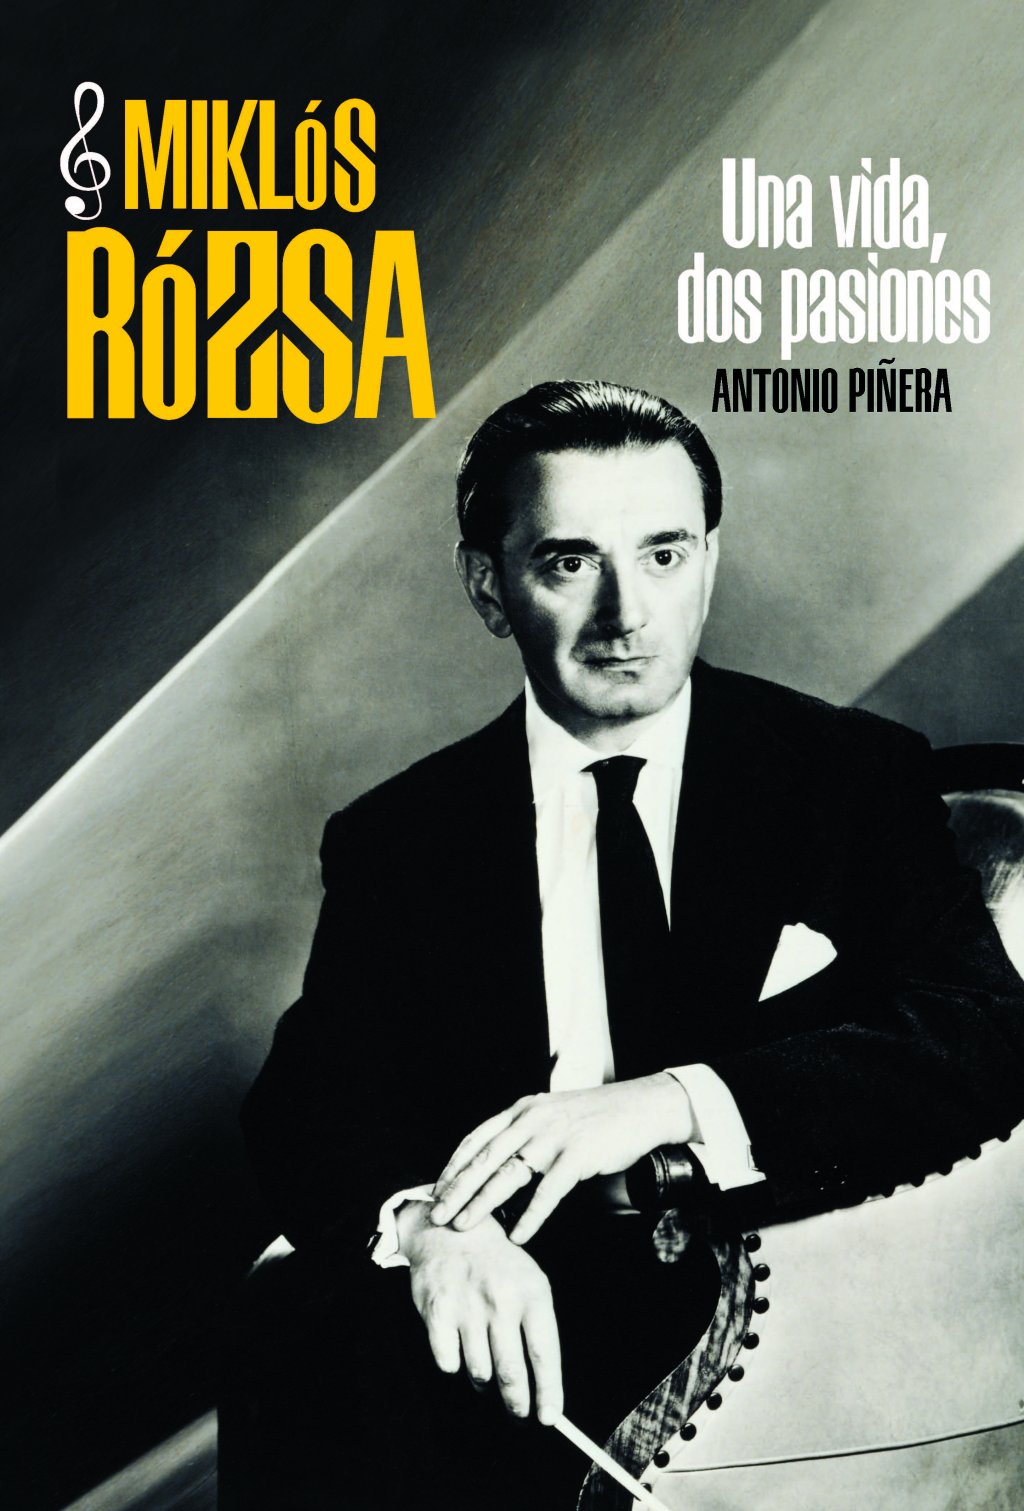 Miklos Rosza